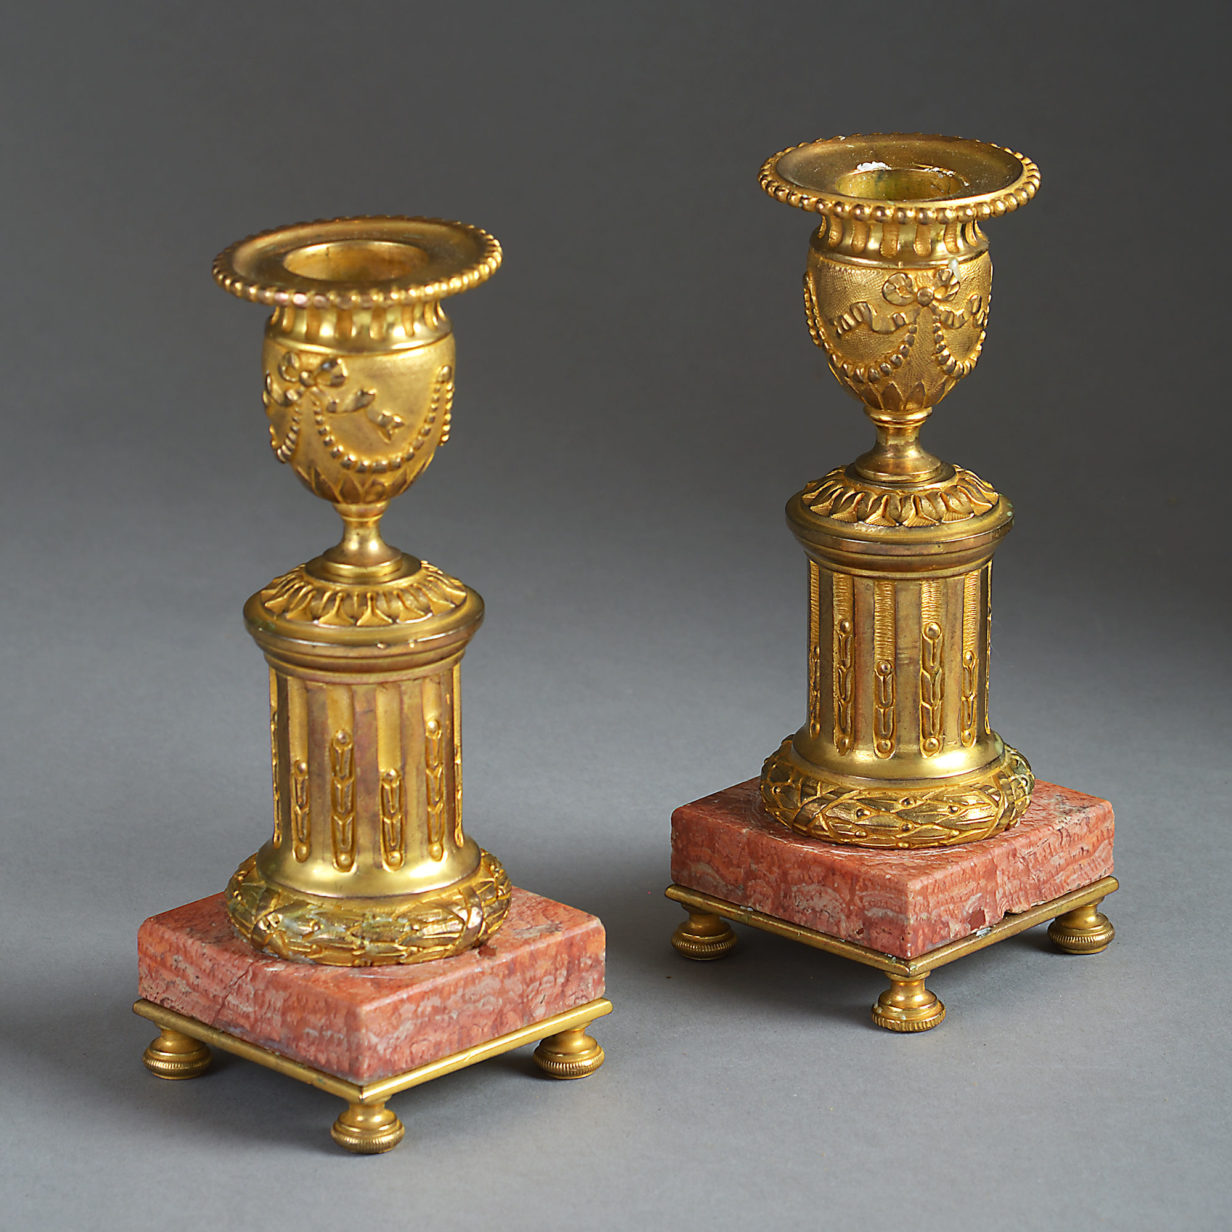 Pair of late 18th century louis xvi period ormolu candlesticks